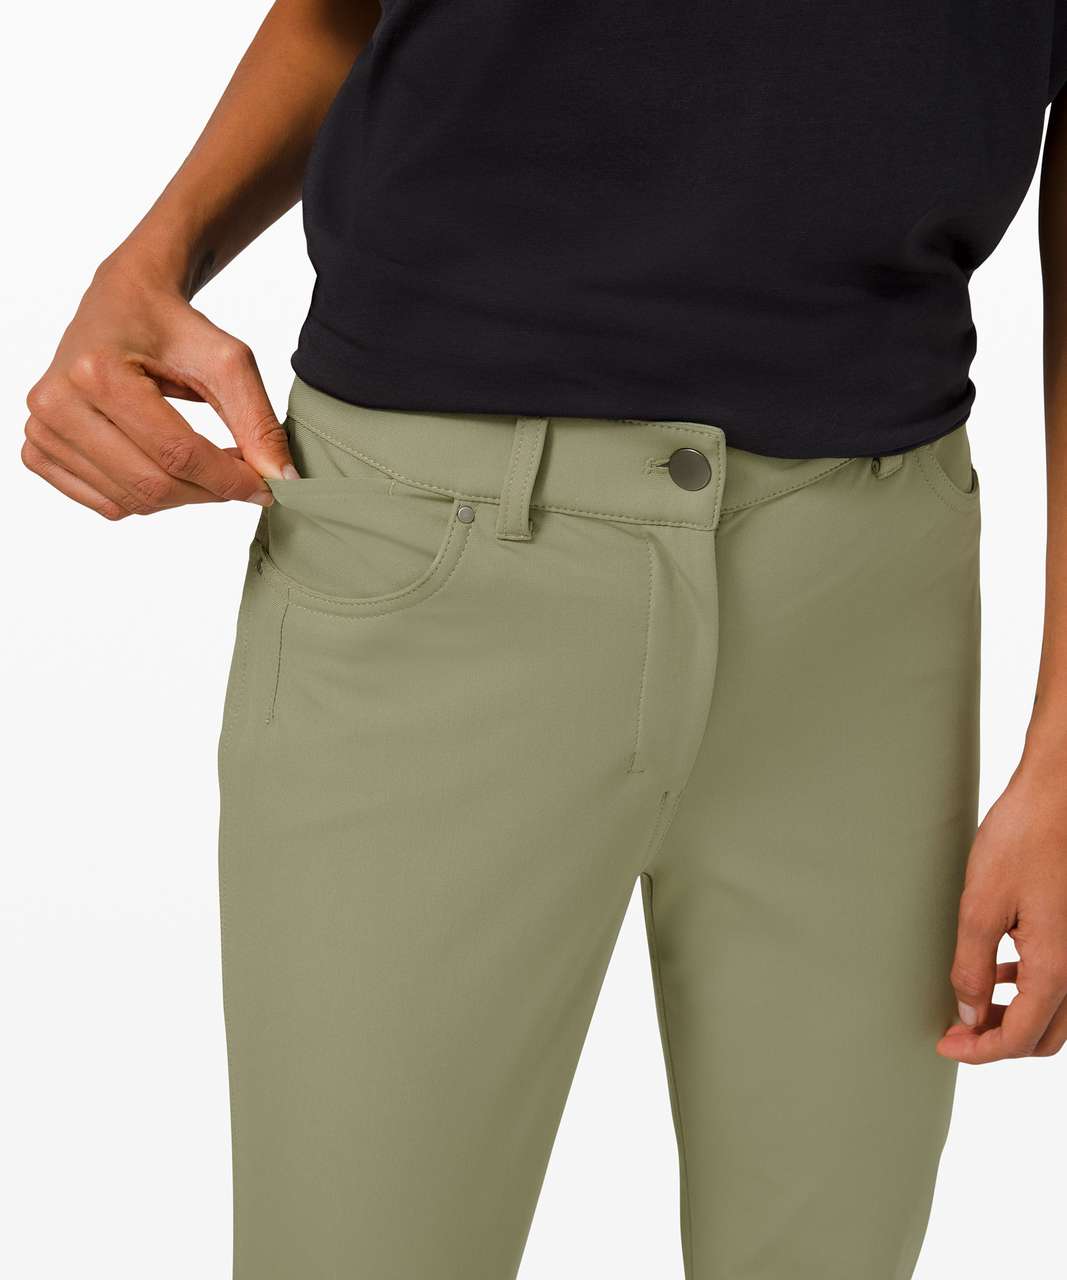 Lululemon City Sleek 5 Pocket 7/8 Pants In Rosemary Green